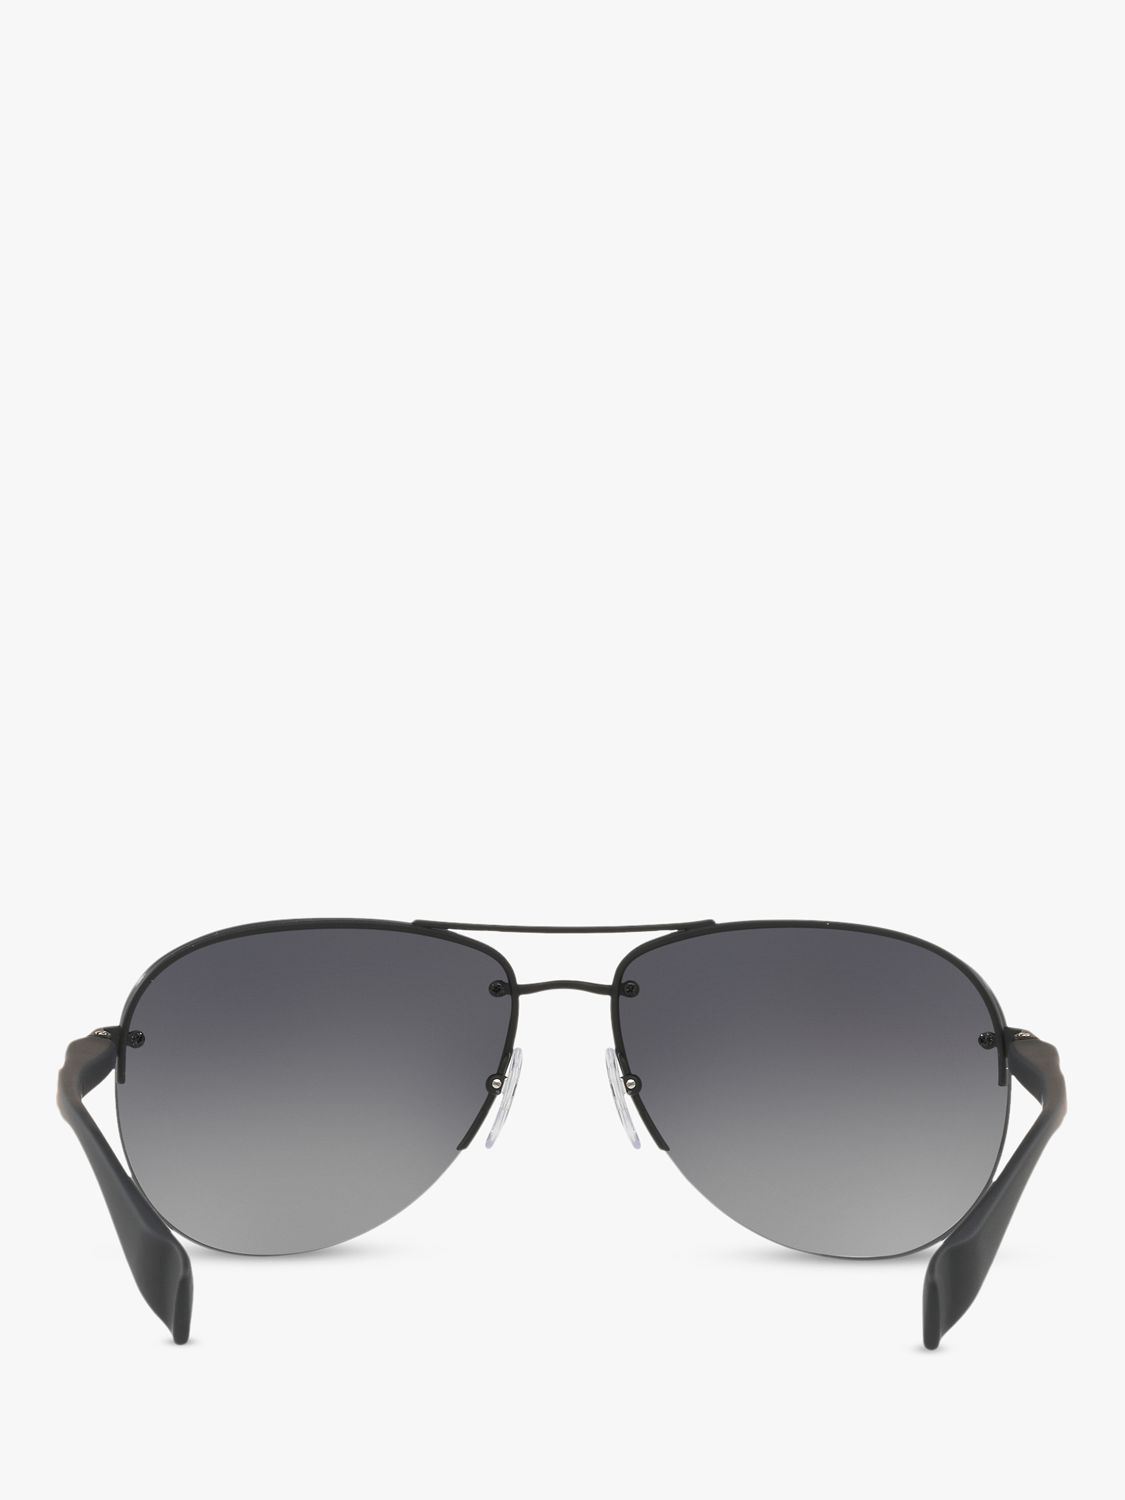 Buy Prada 56MS Men's Aviator Sunglasses, Black Rubber Online at johnlewis.com